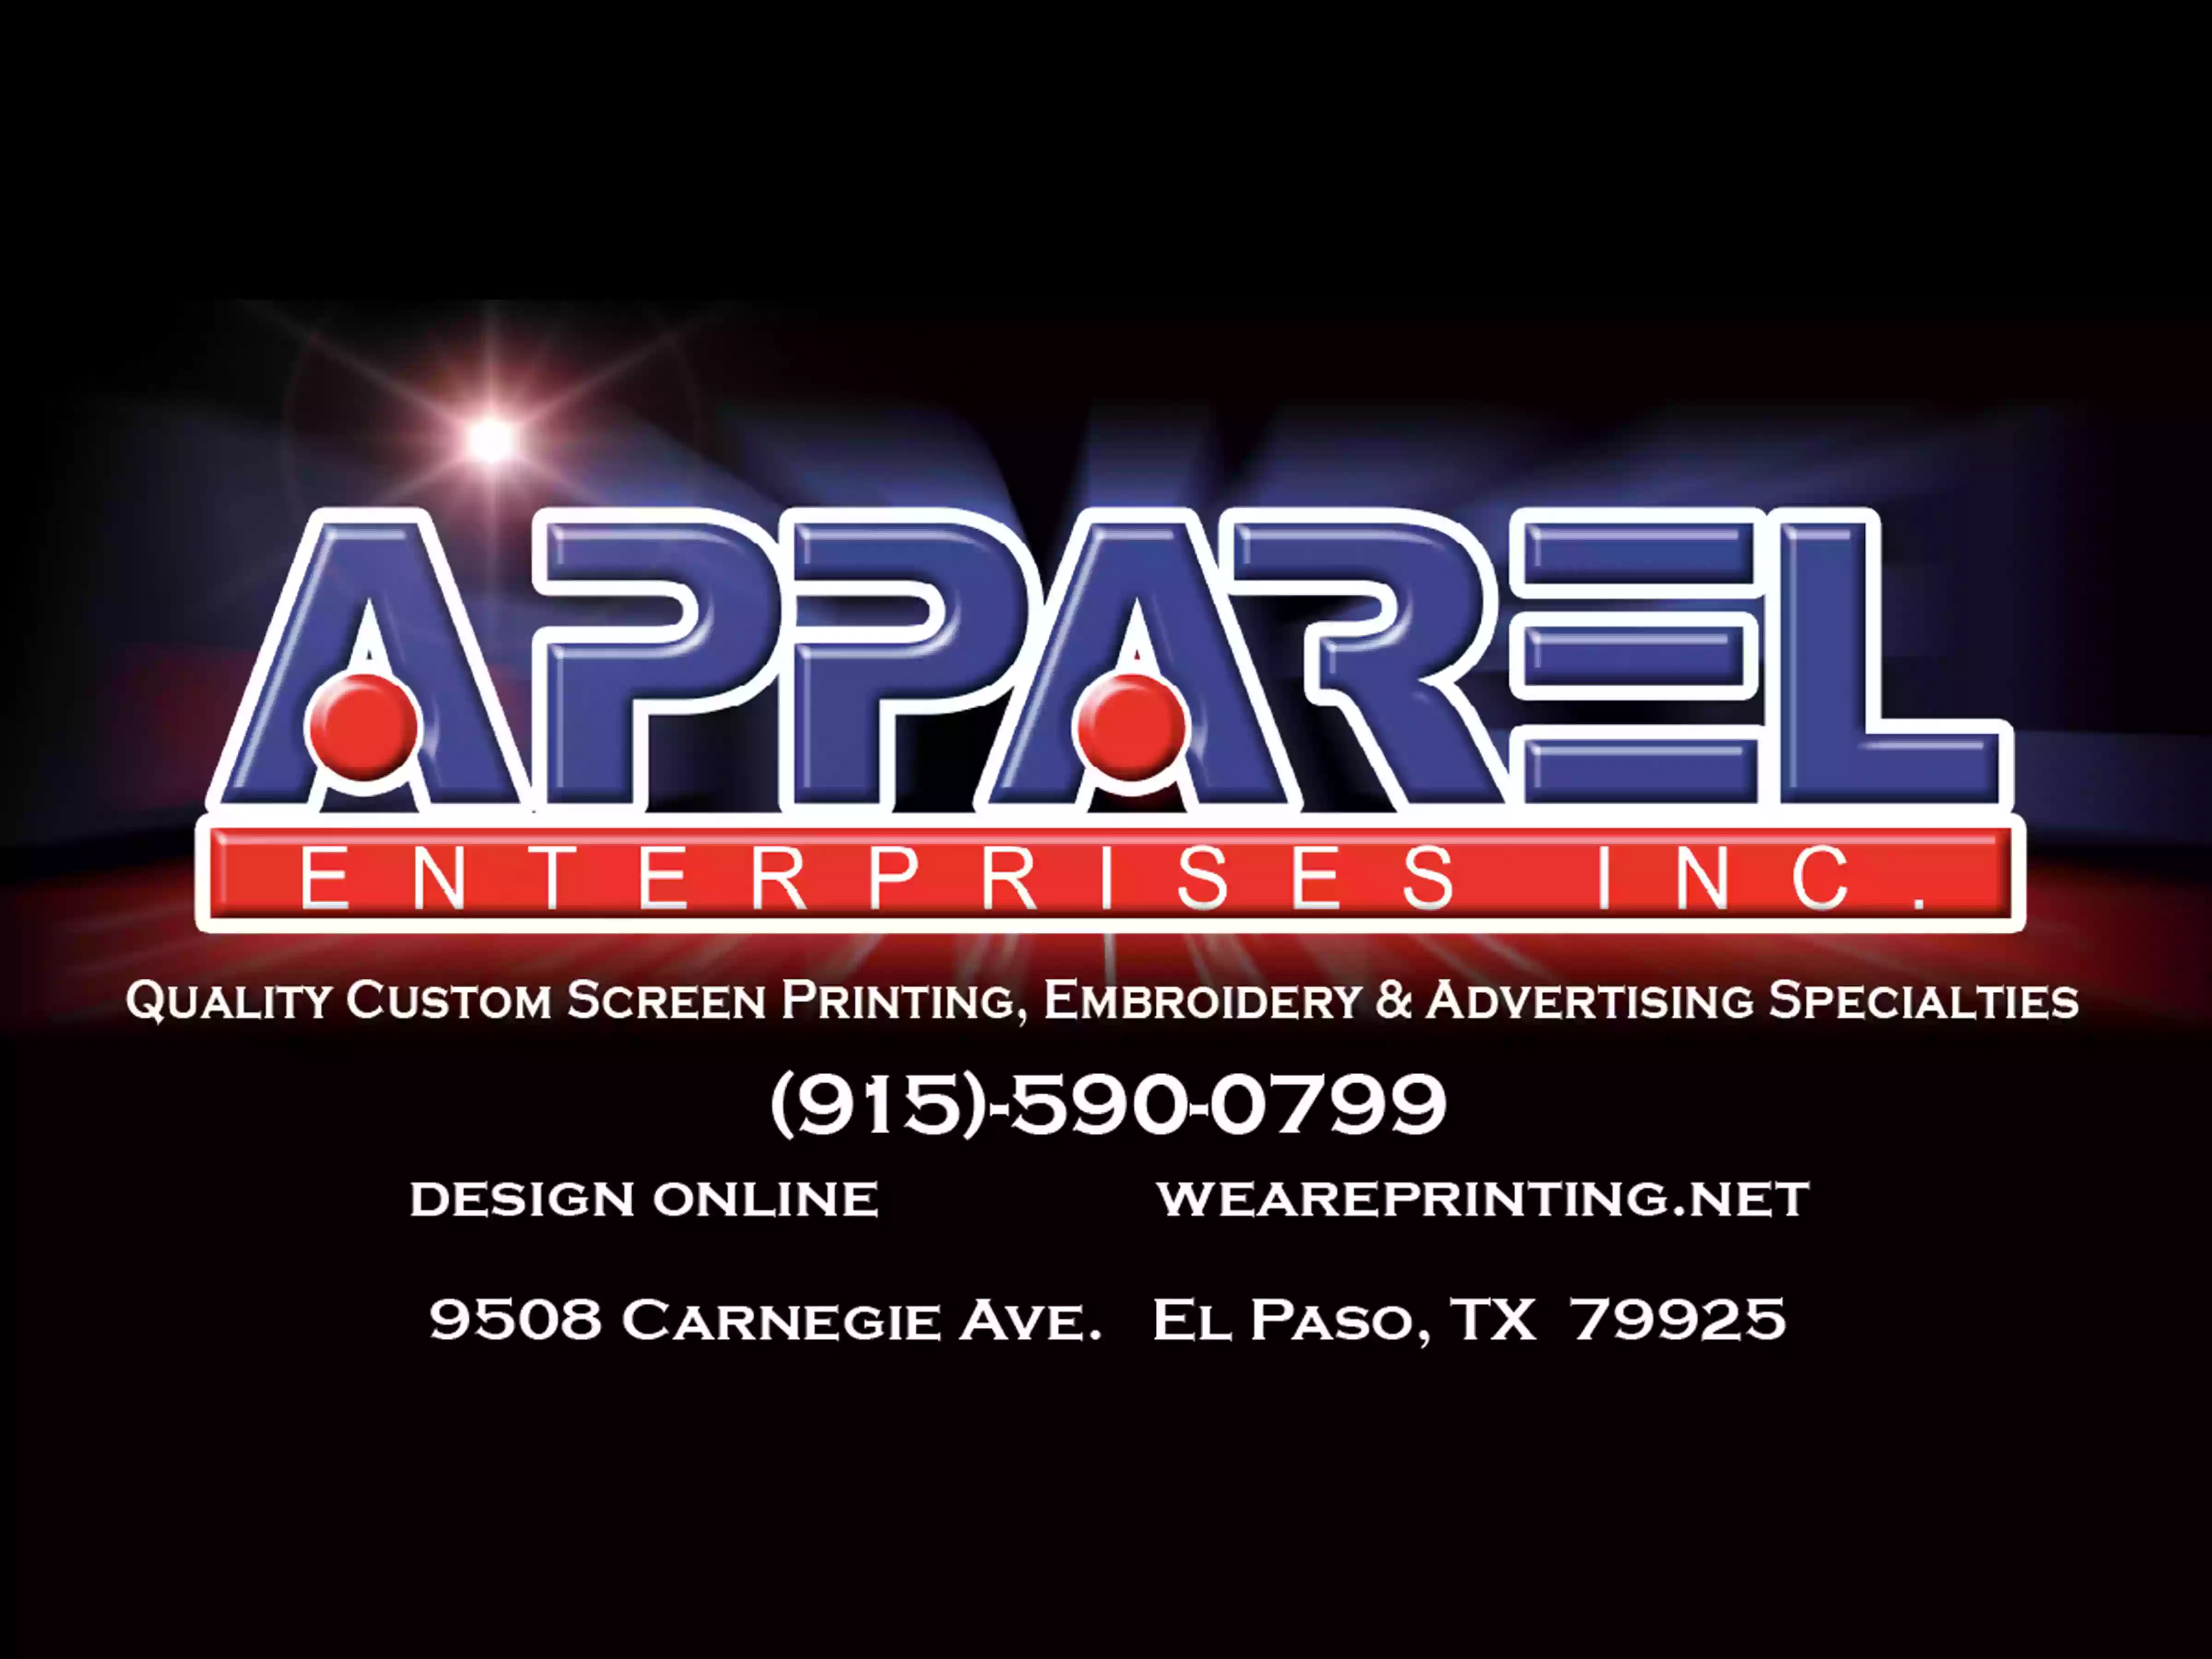 Apparel Enterprises Inc.